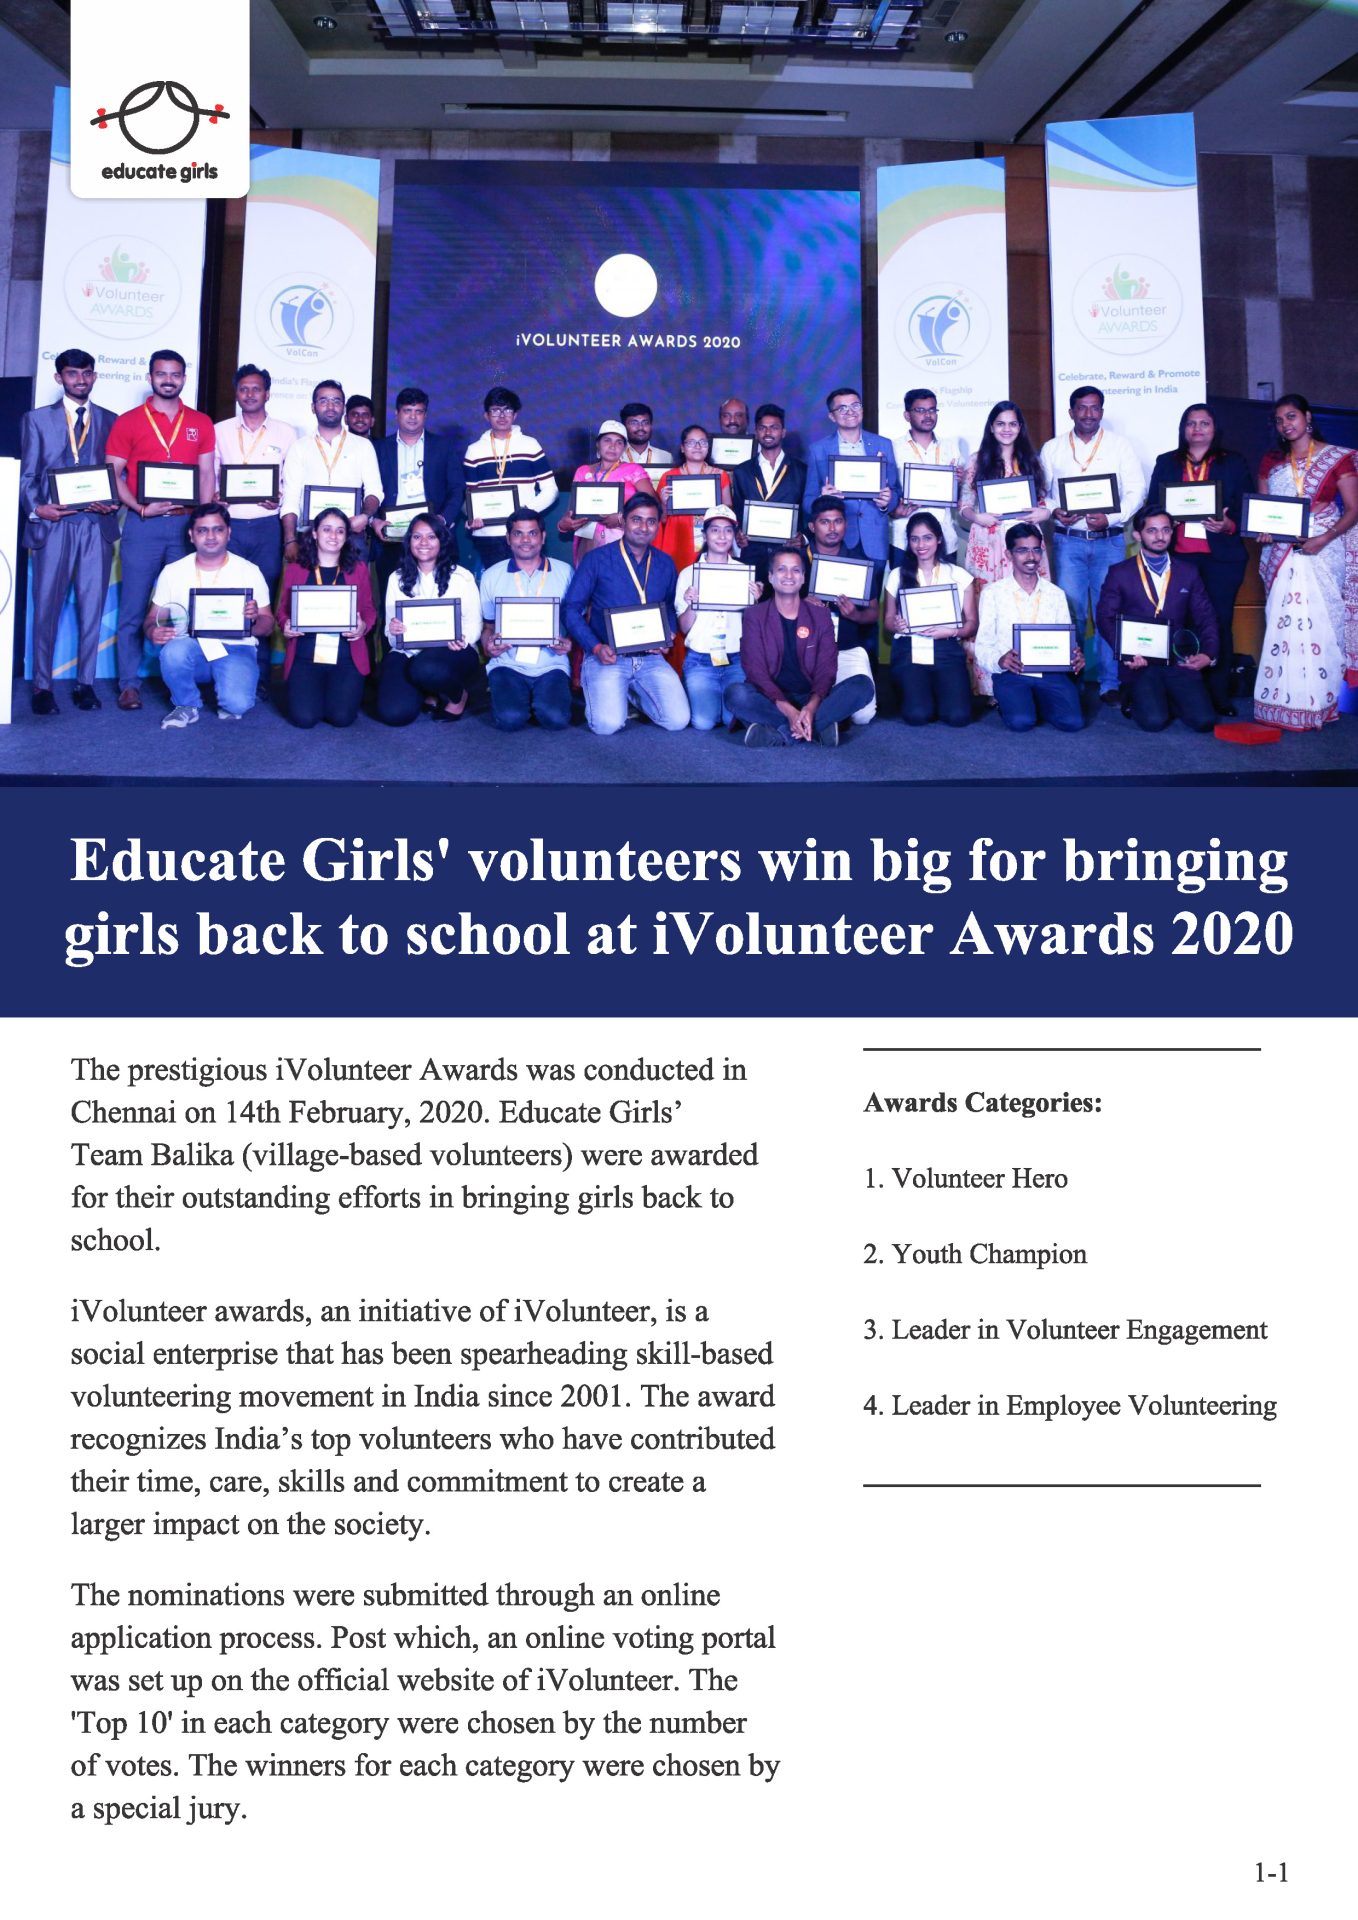 Educate Girls’ Volunteers Win Big At Ivolunteer Awards 2020 For Bringing Girls Back To School